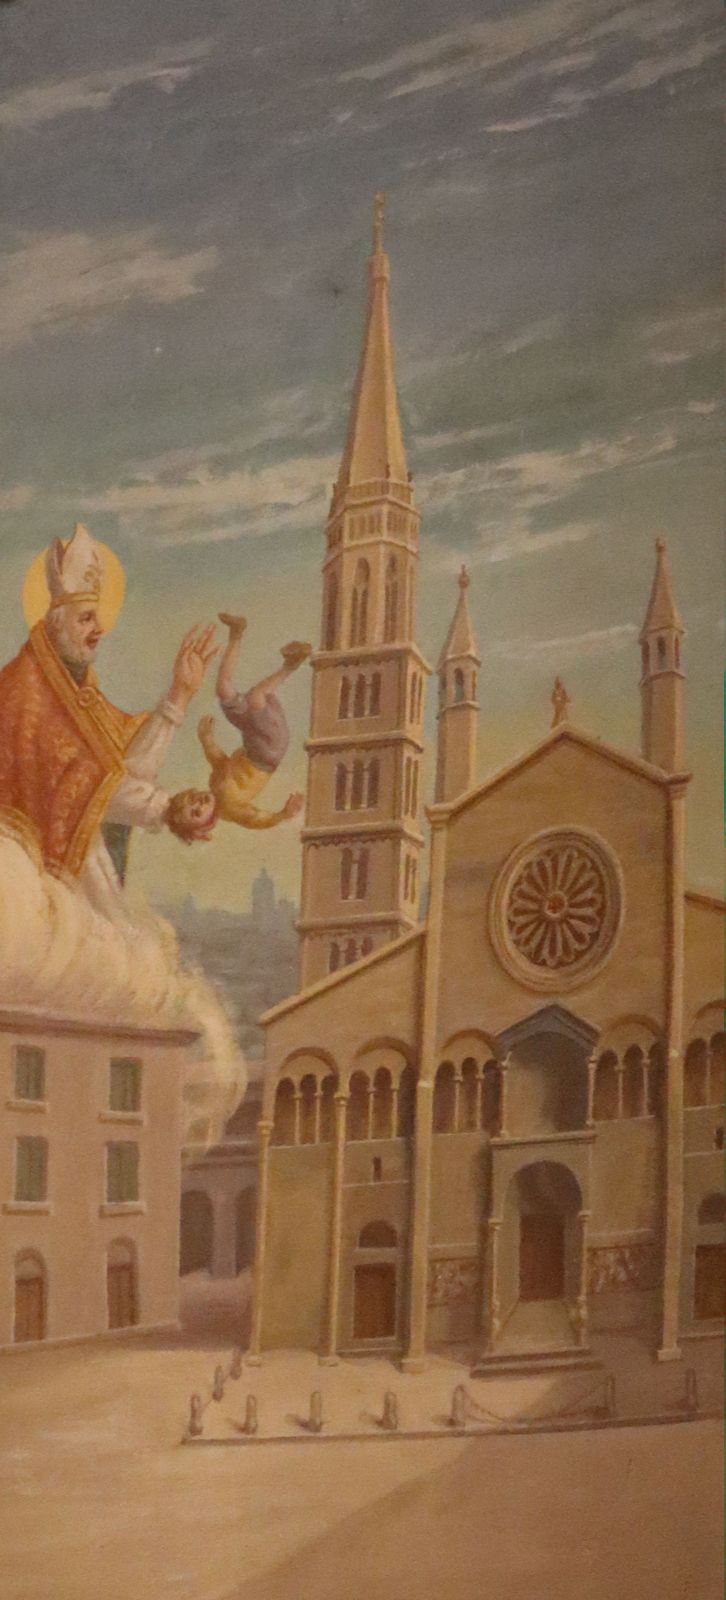 Geminianus rettet einen vom Kirchturm fallenden Jungen